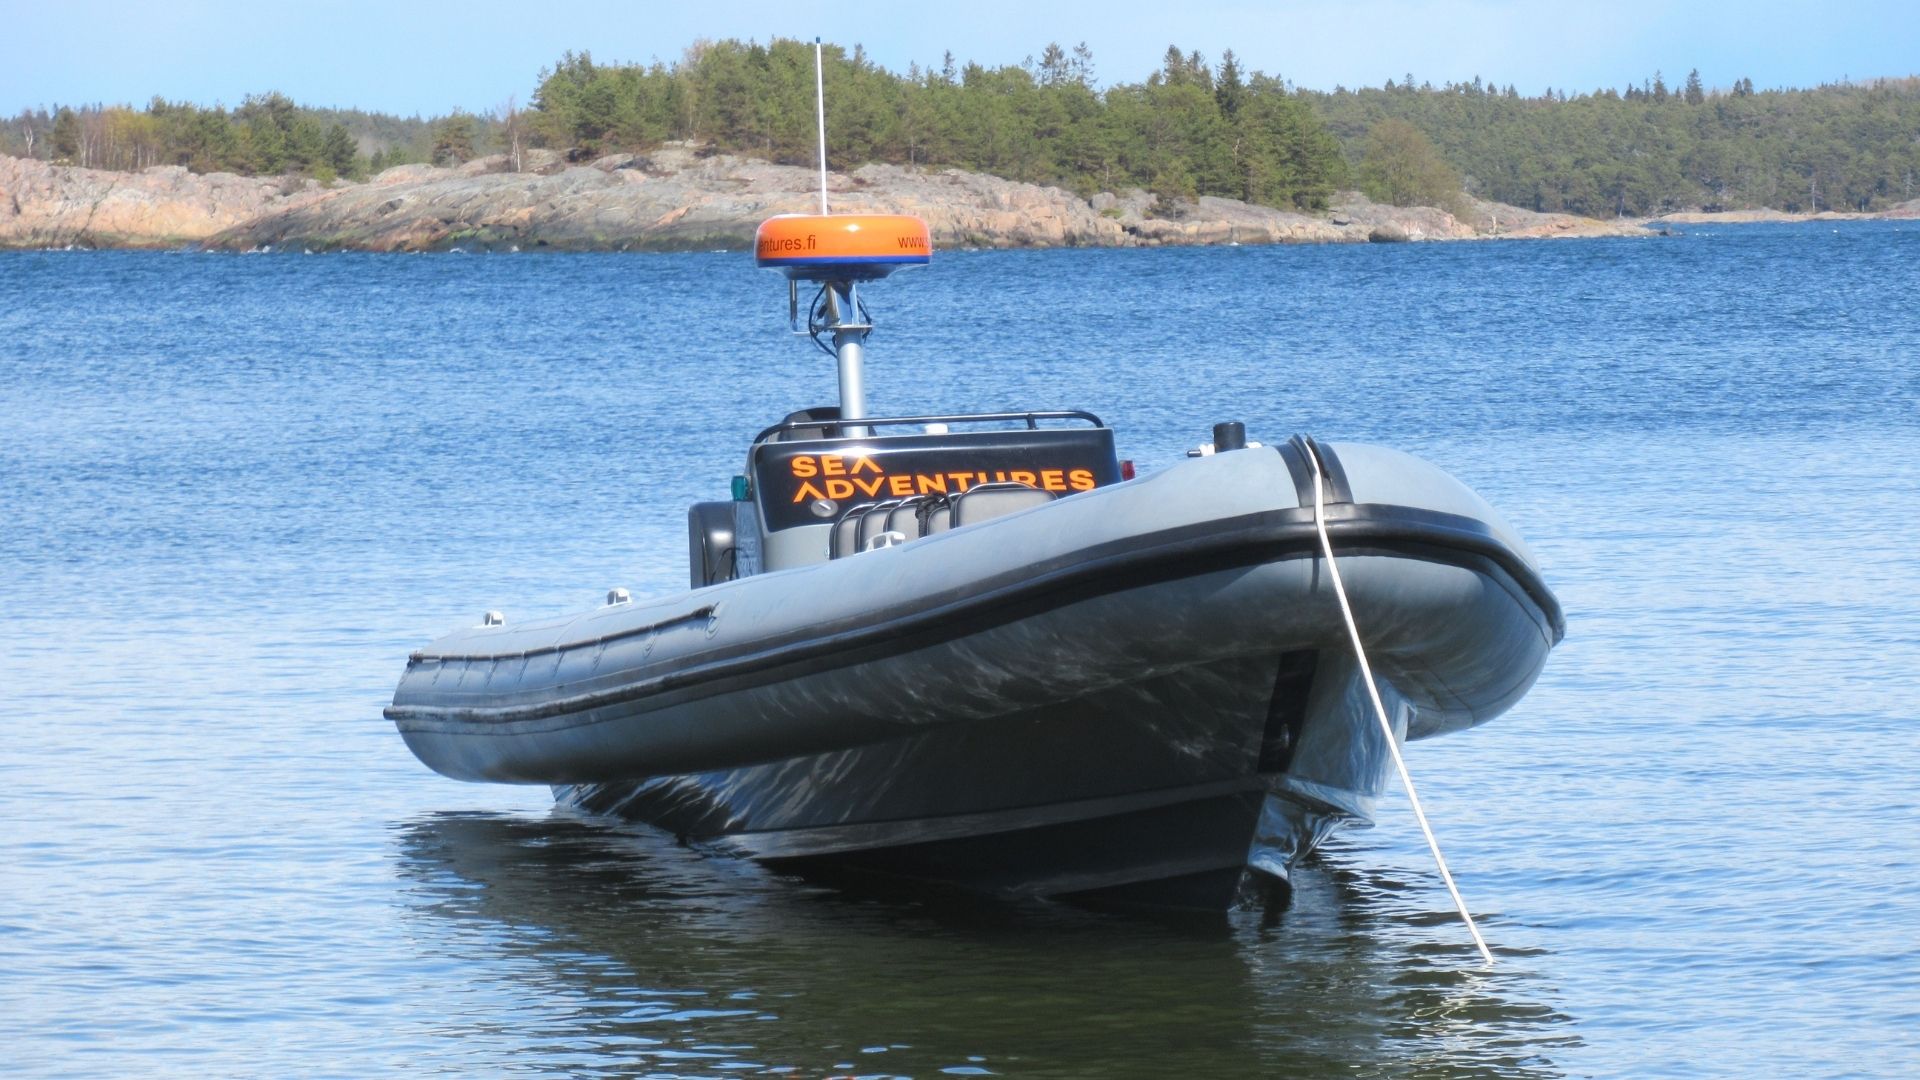 Sea Adventures RIB anchored in Porkkala